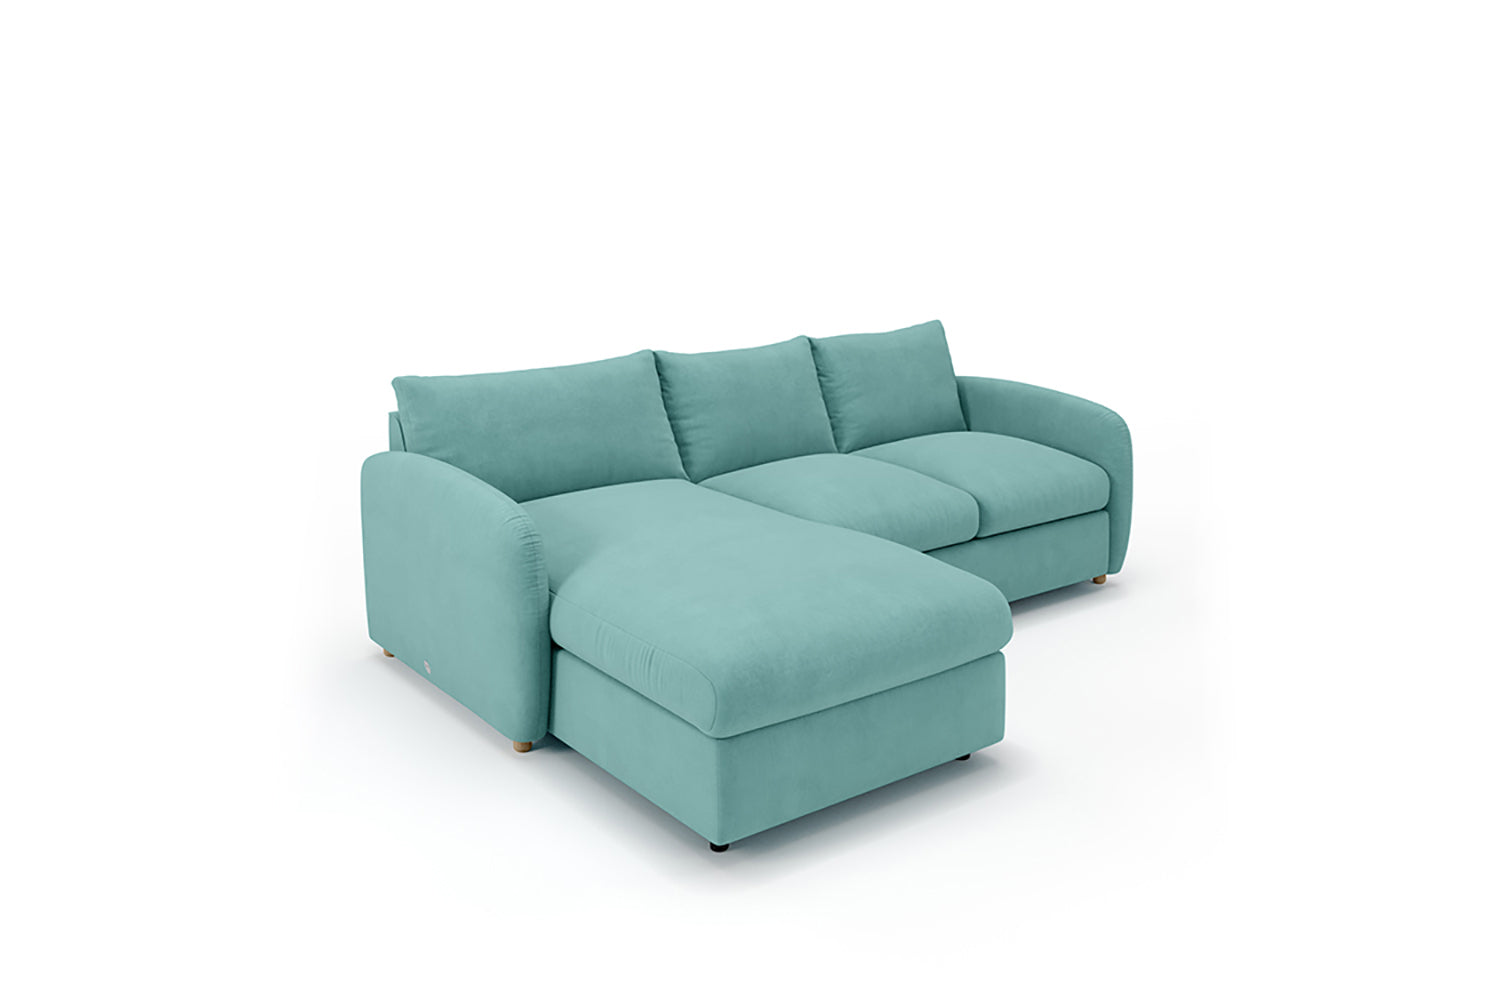 SNUG | The Small Biggie Chaise Corner Sofa in Soft Teal